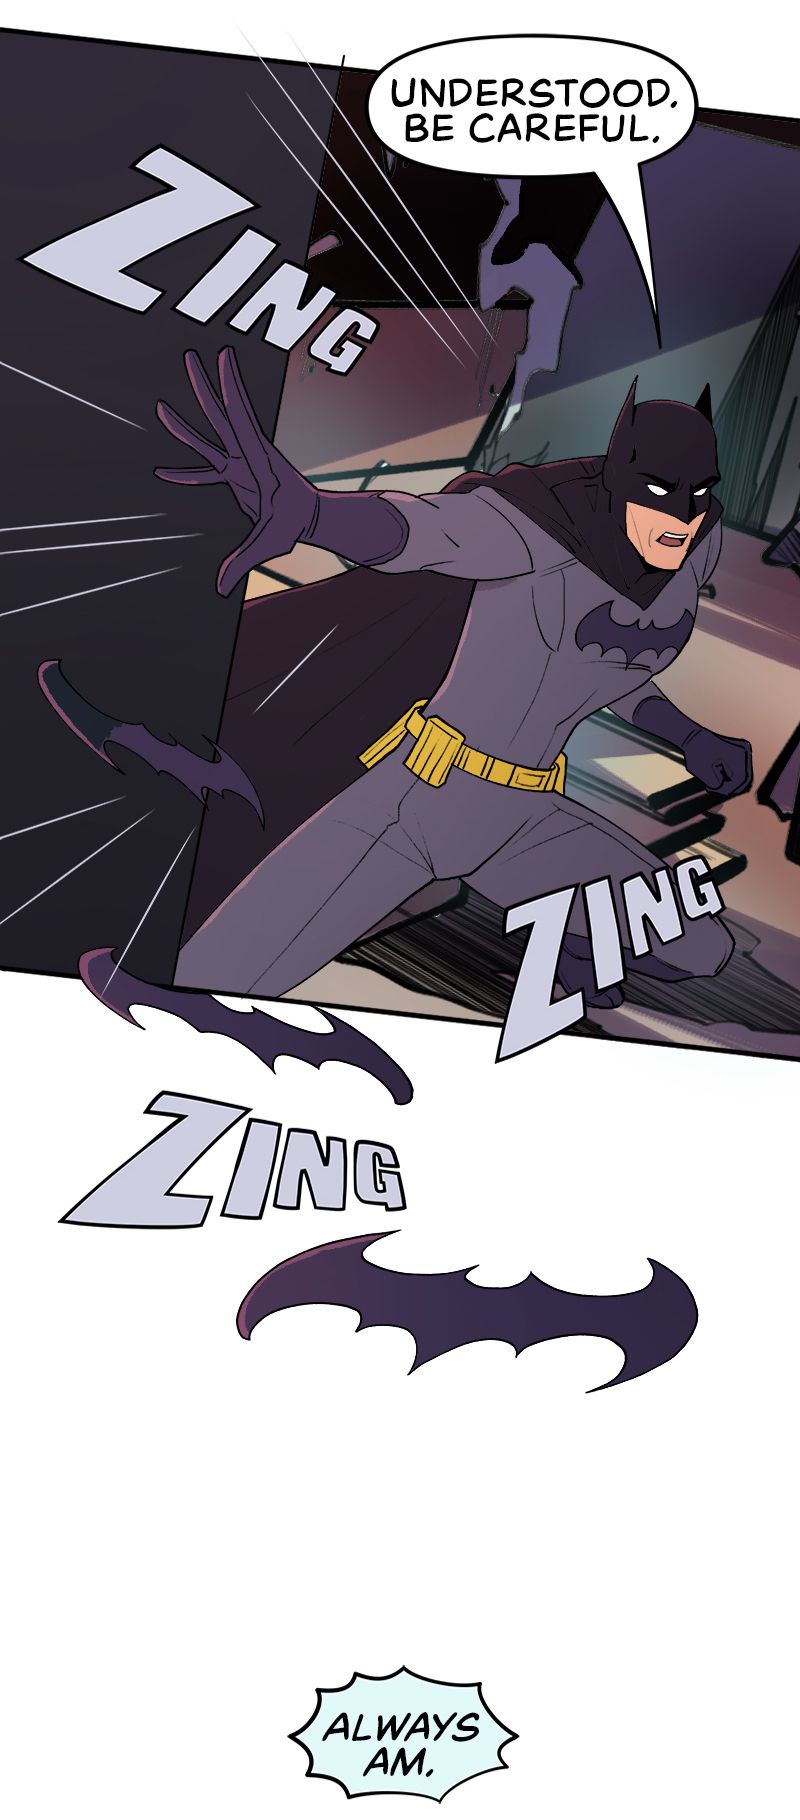 Batman tells Robin to be careful as he throws batarangs. “Always am,” he replies in Batman: Wayne Family Adventures.